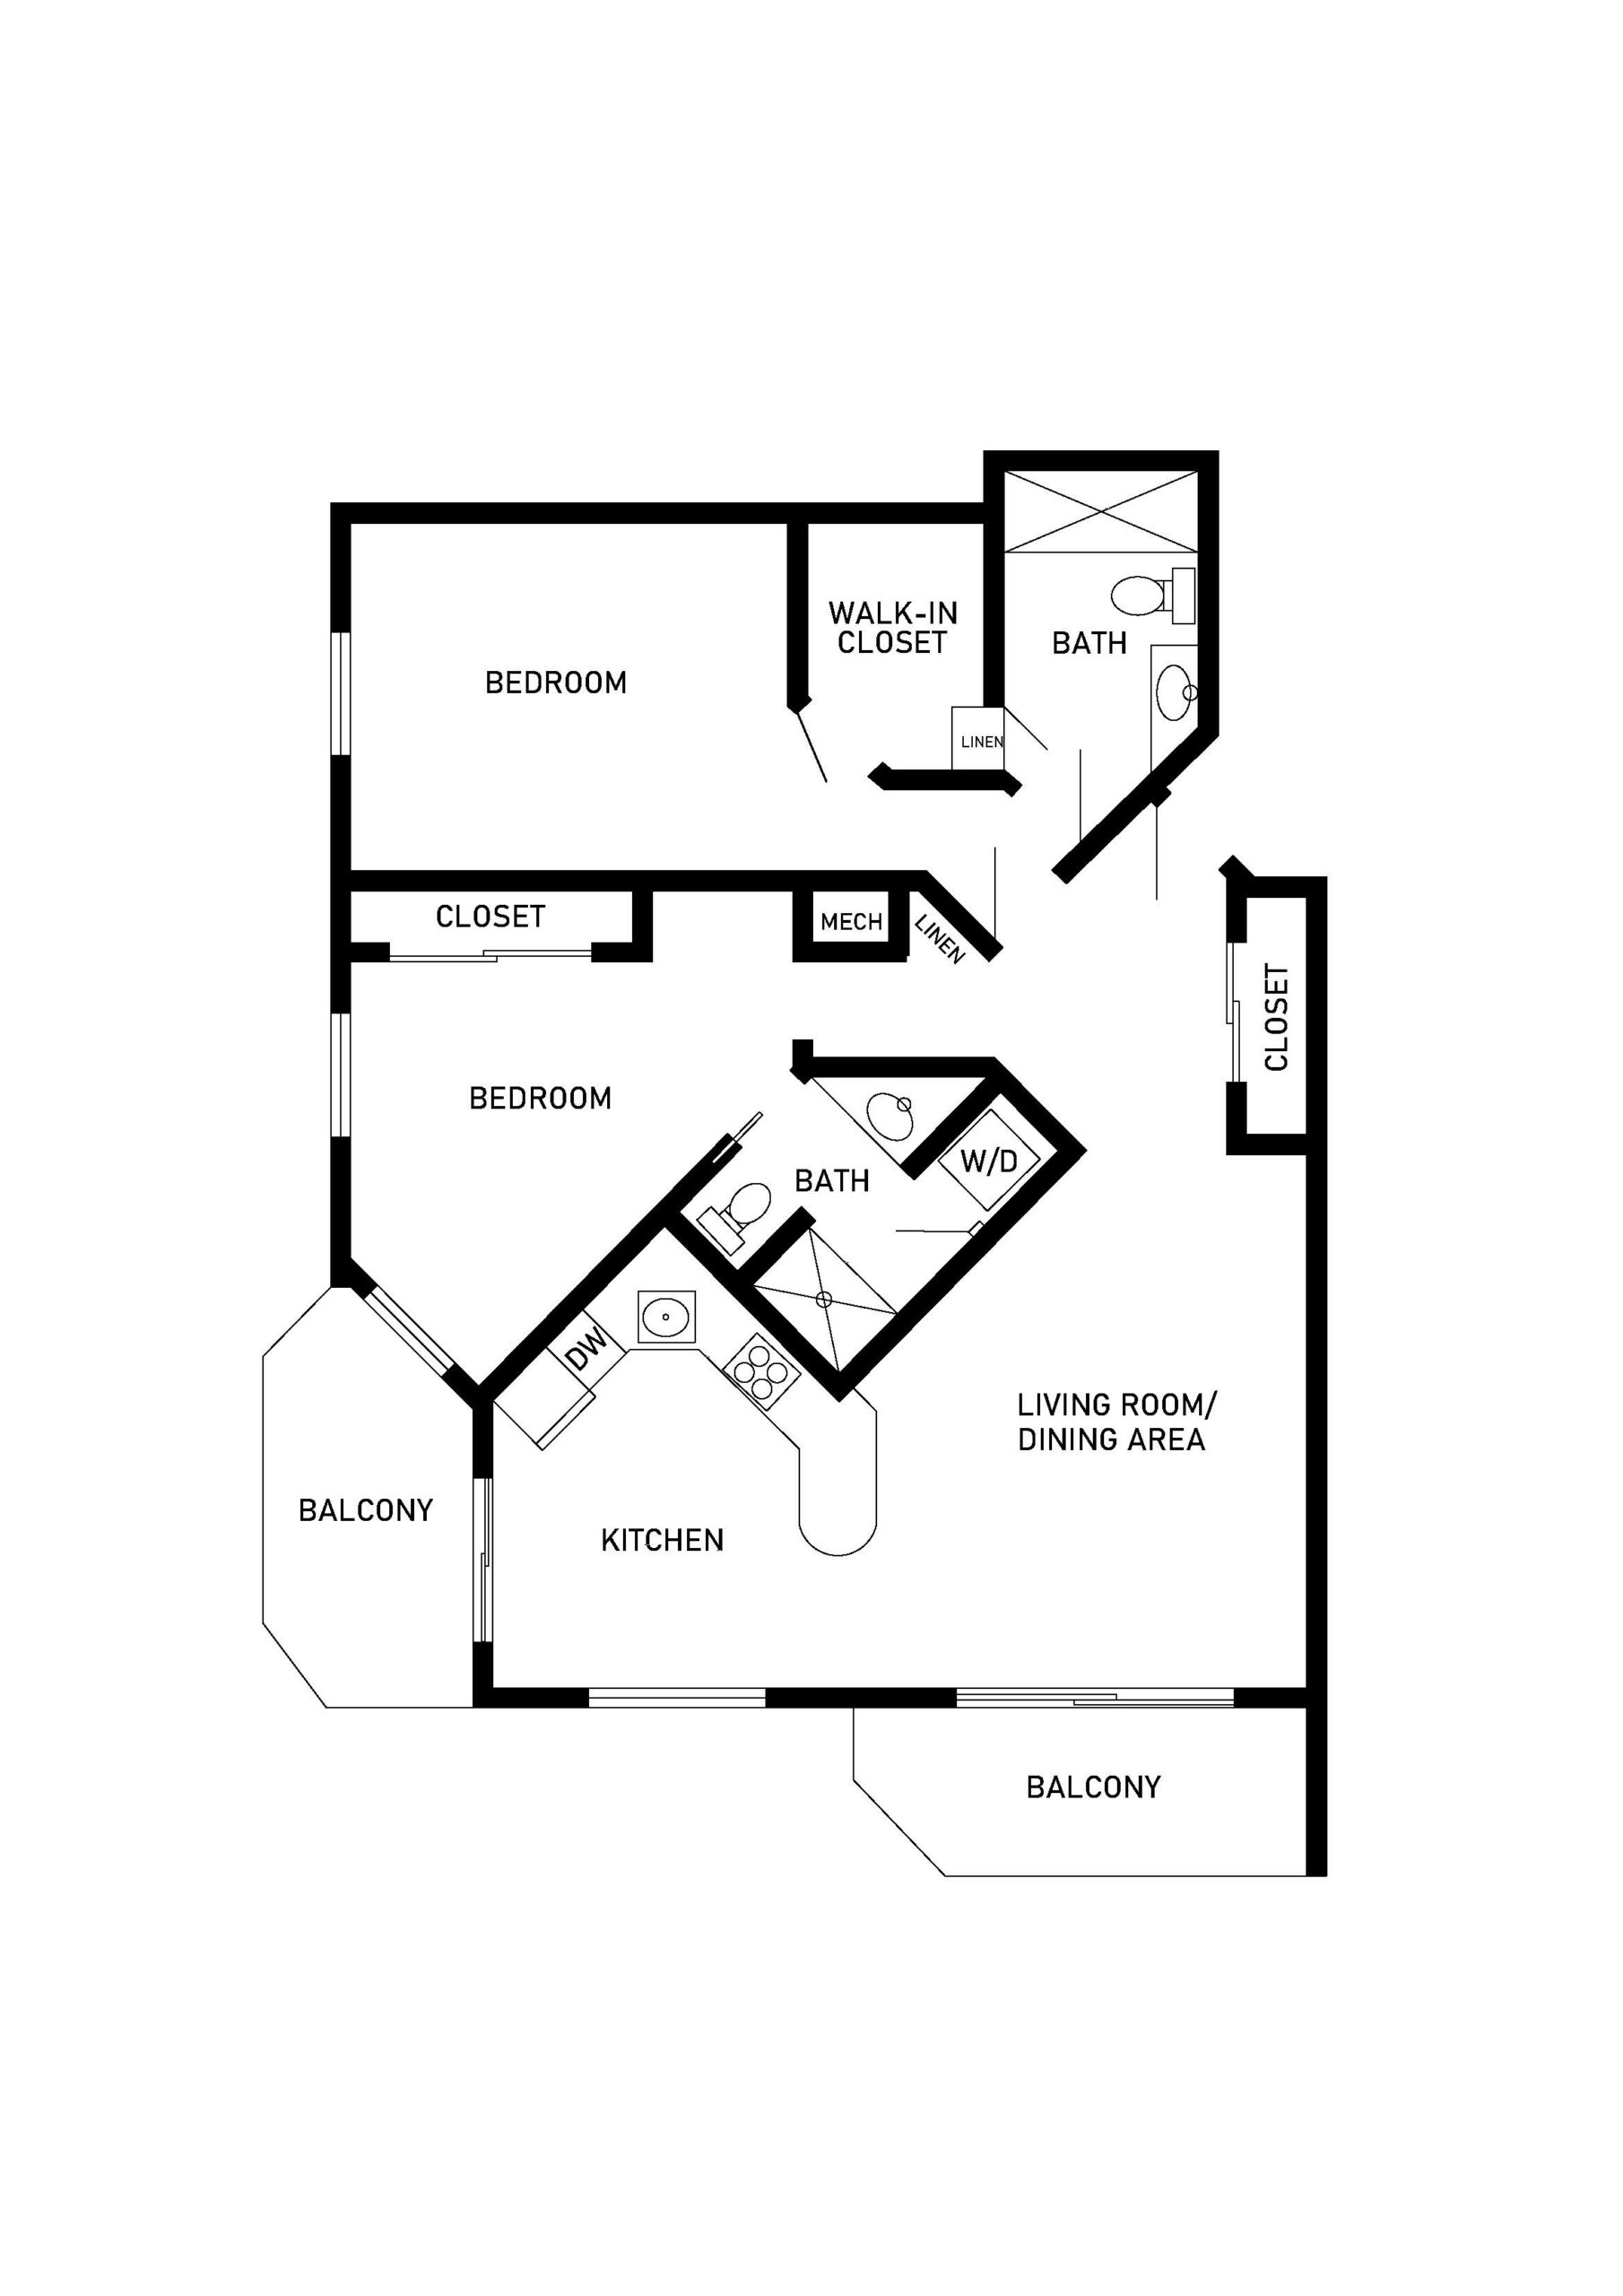 Redwood 2 bed 2 bath apartment floor plan